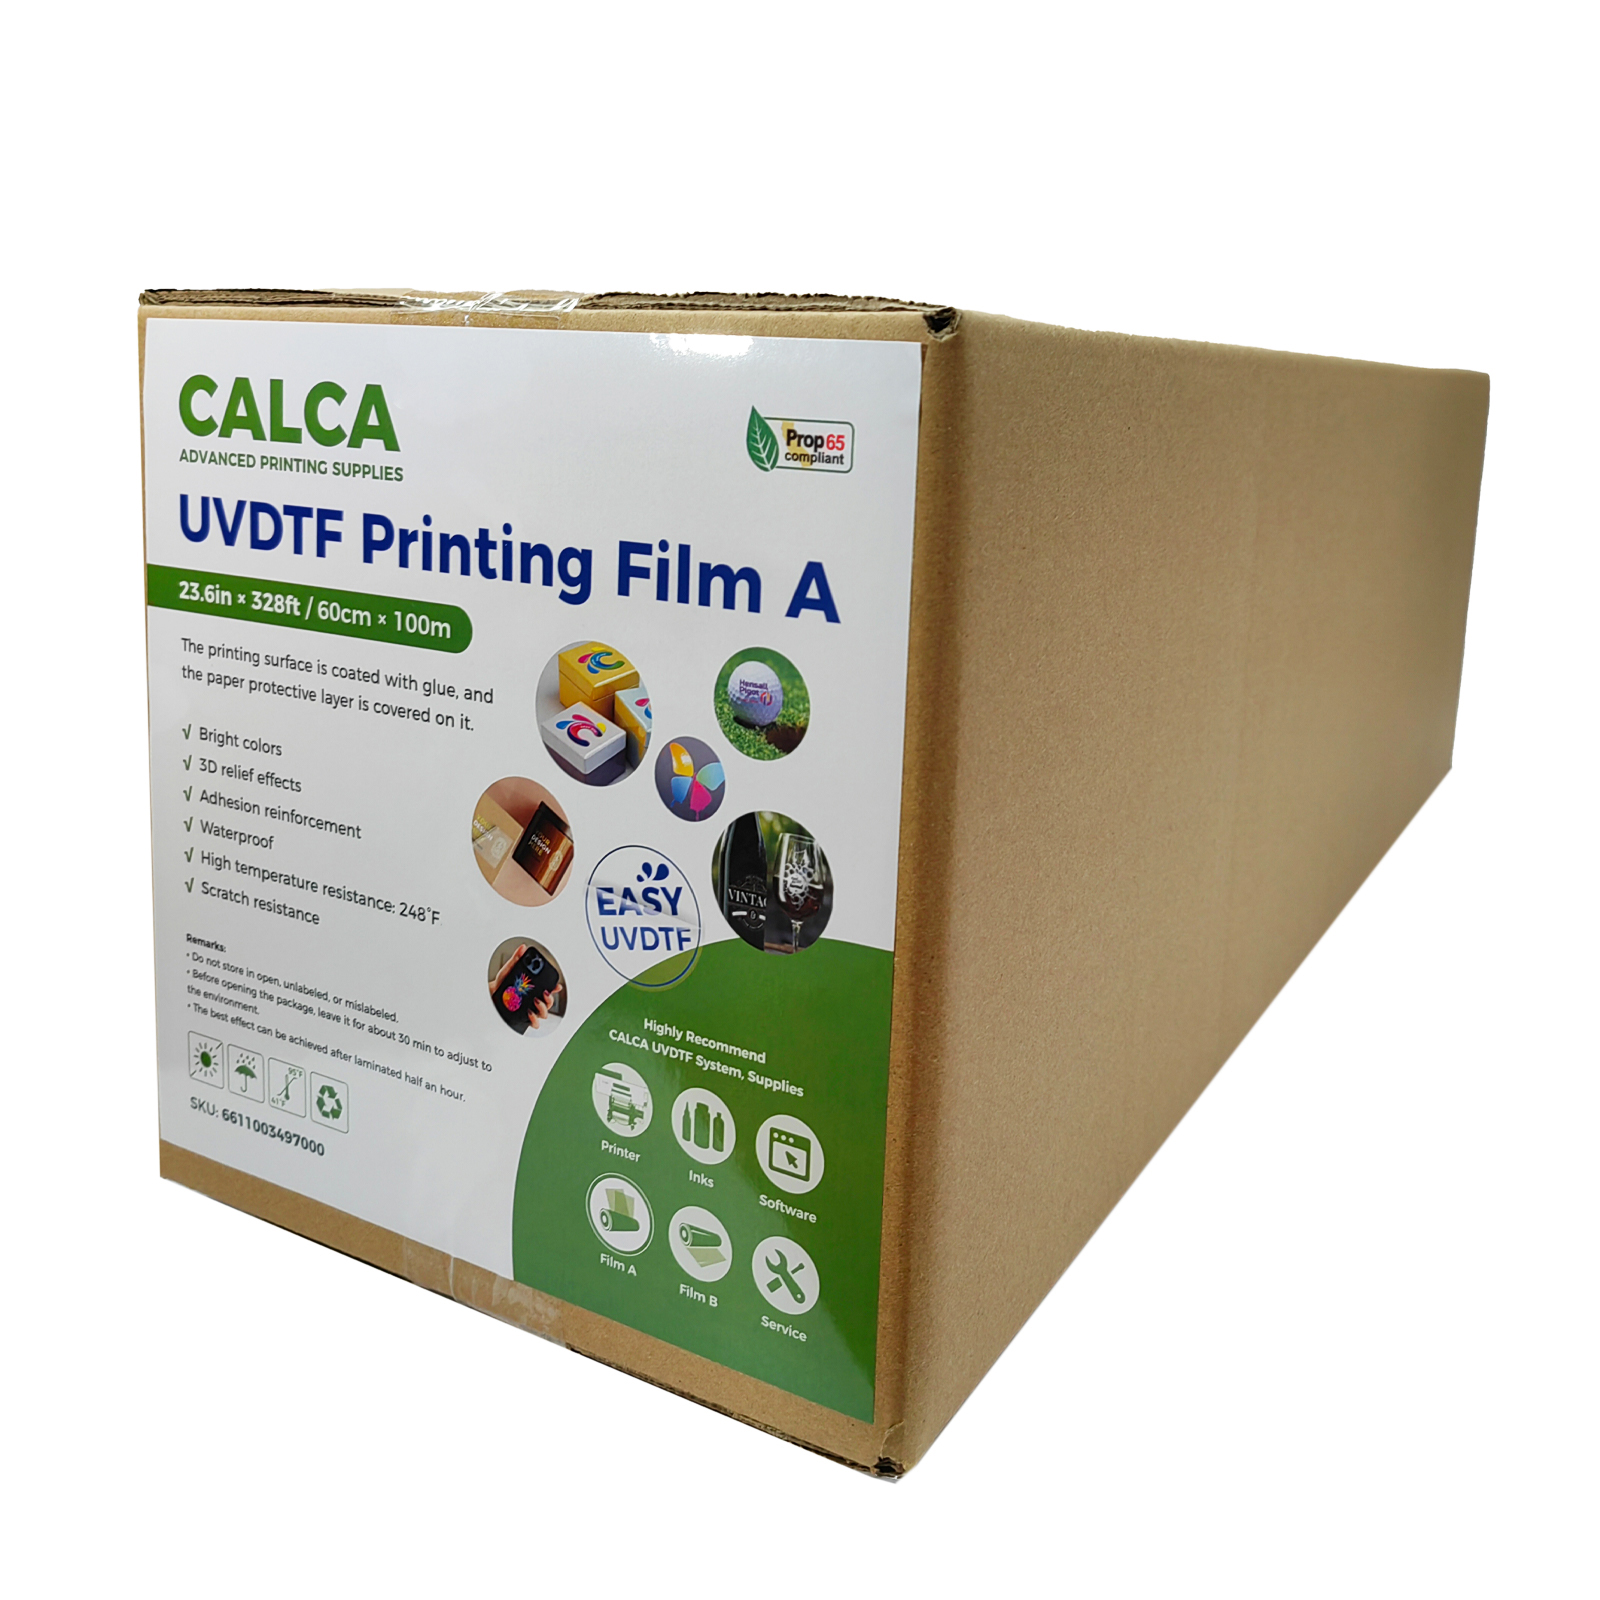 CALCA 23.6in x 328ft (60cm x 100m) UV DTF Transfer Film A Roll Crystal Label Sticker Printing Film for 24in DTF Printer